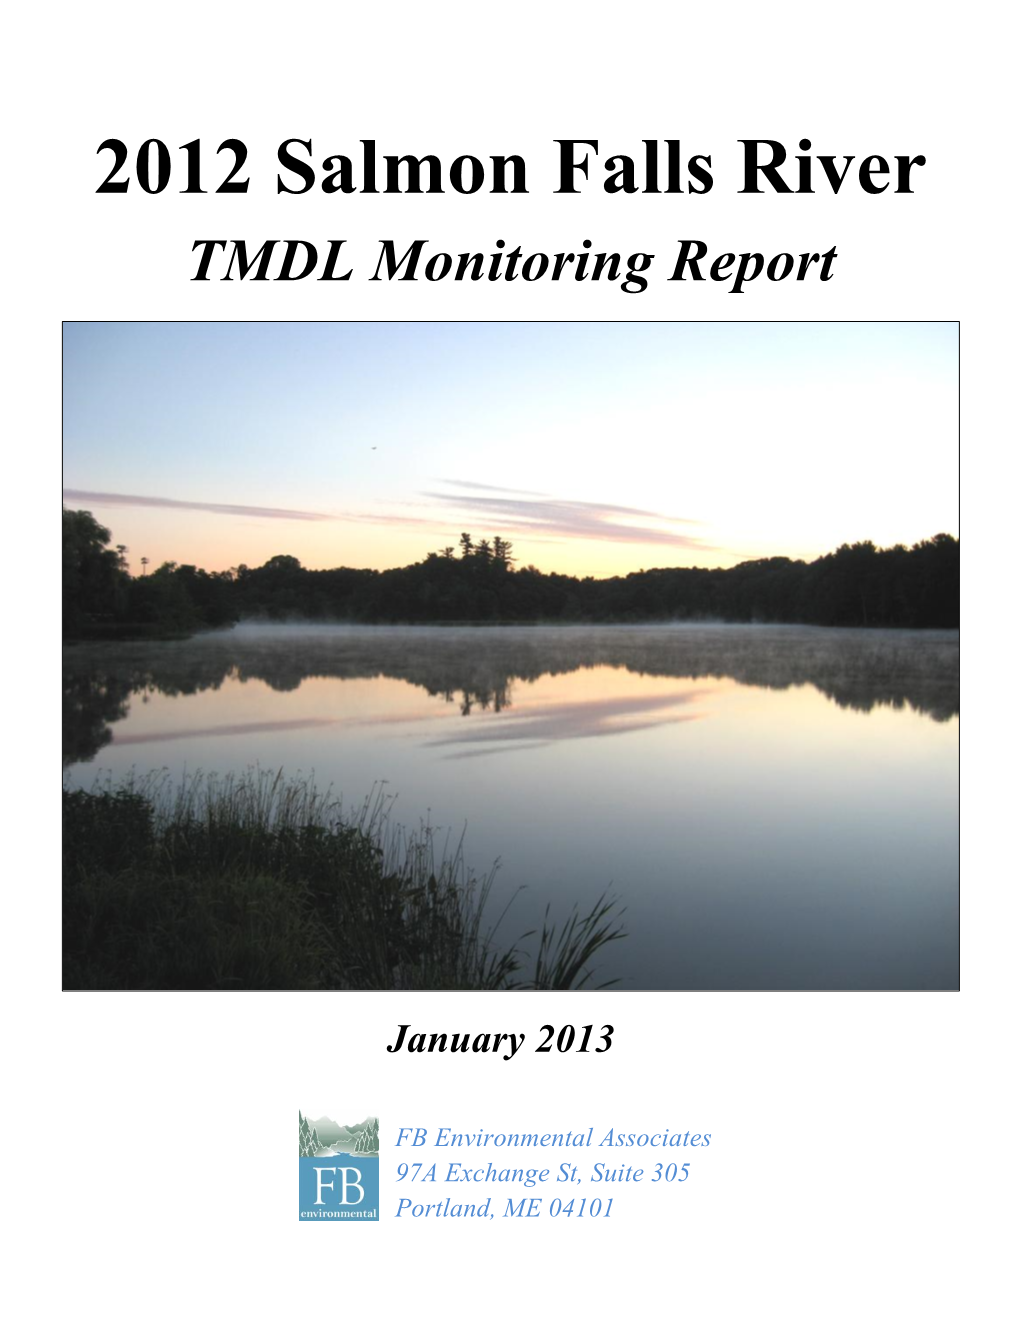 2012 Salmon Falls River TMDL Monitoring Report